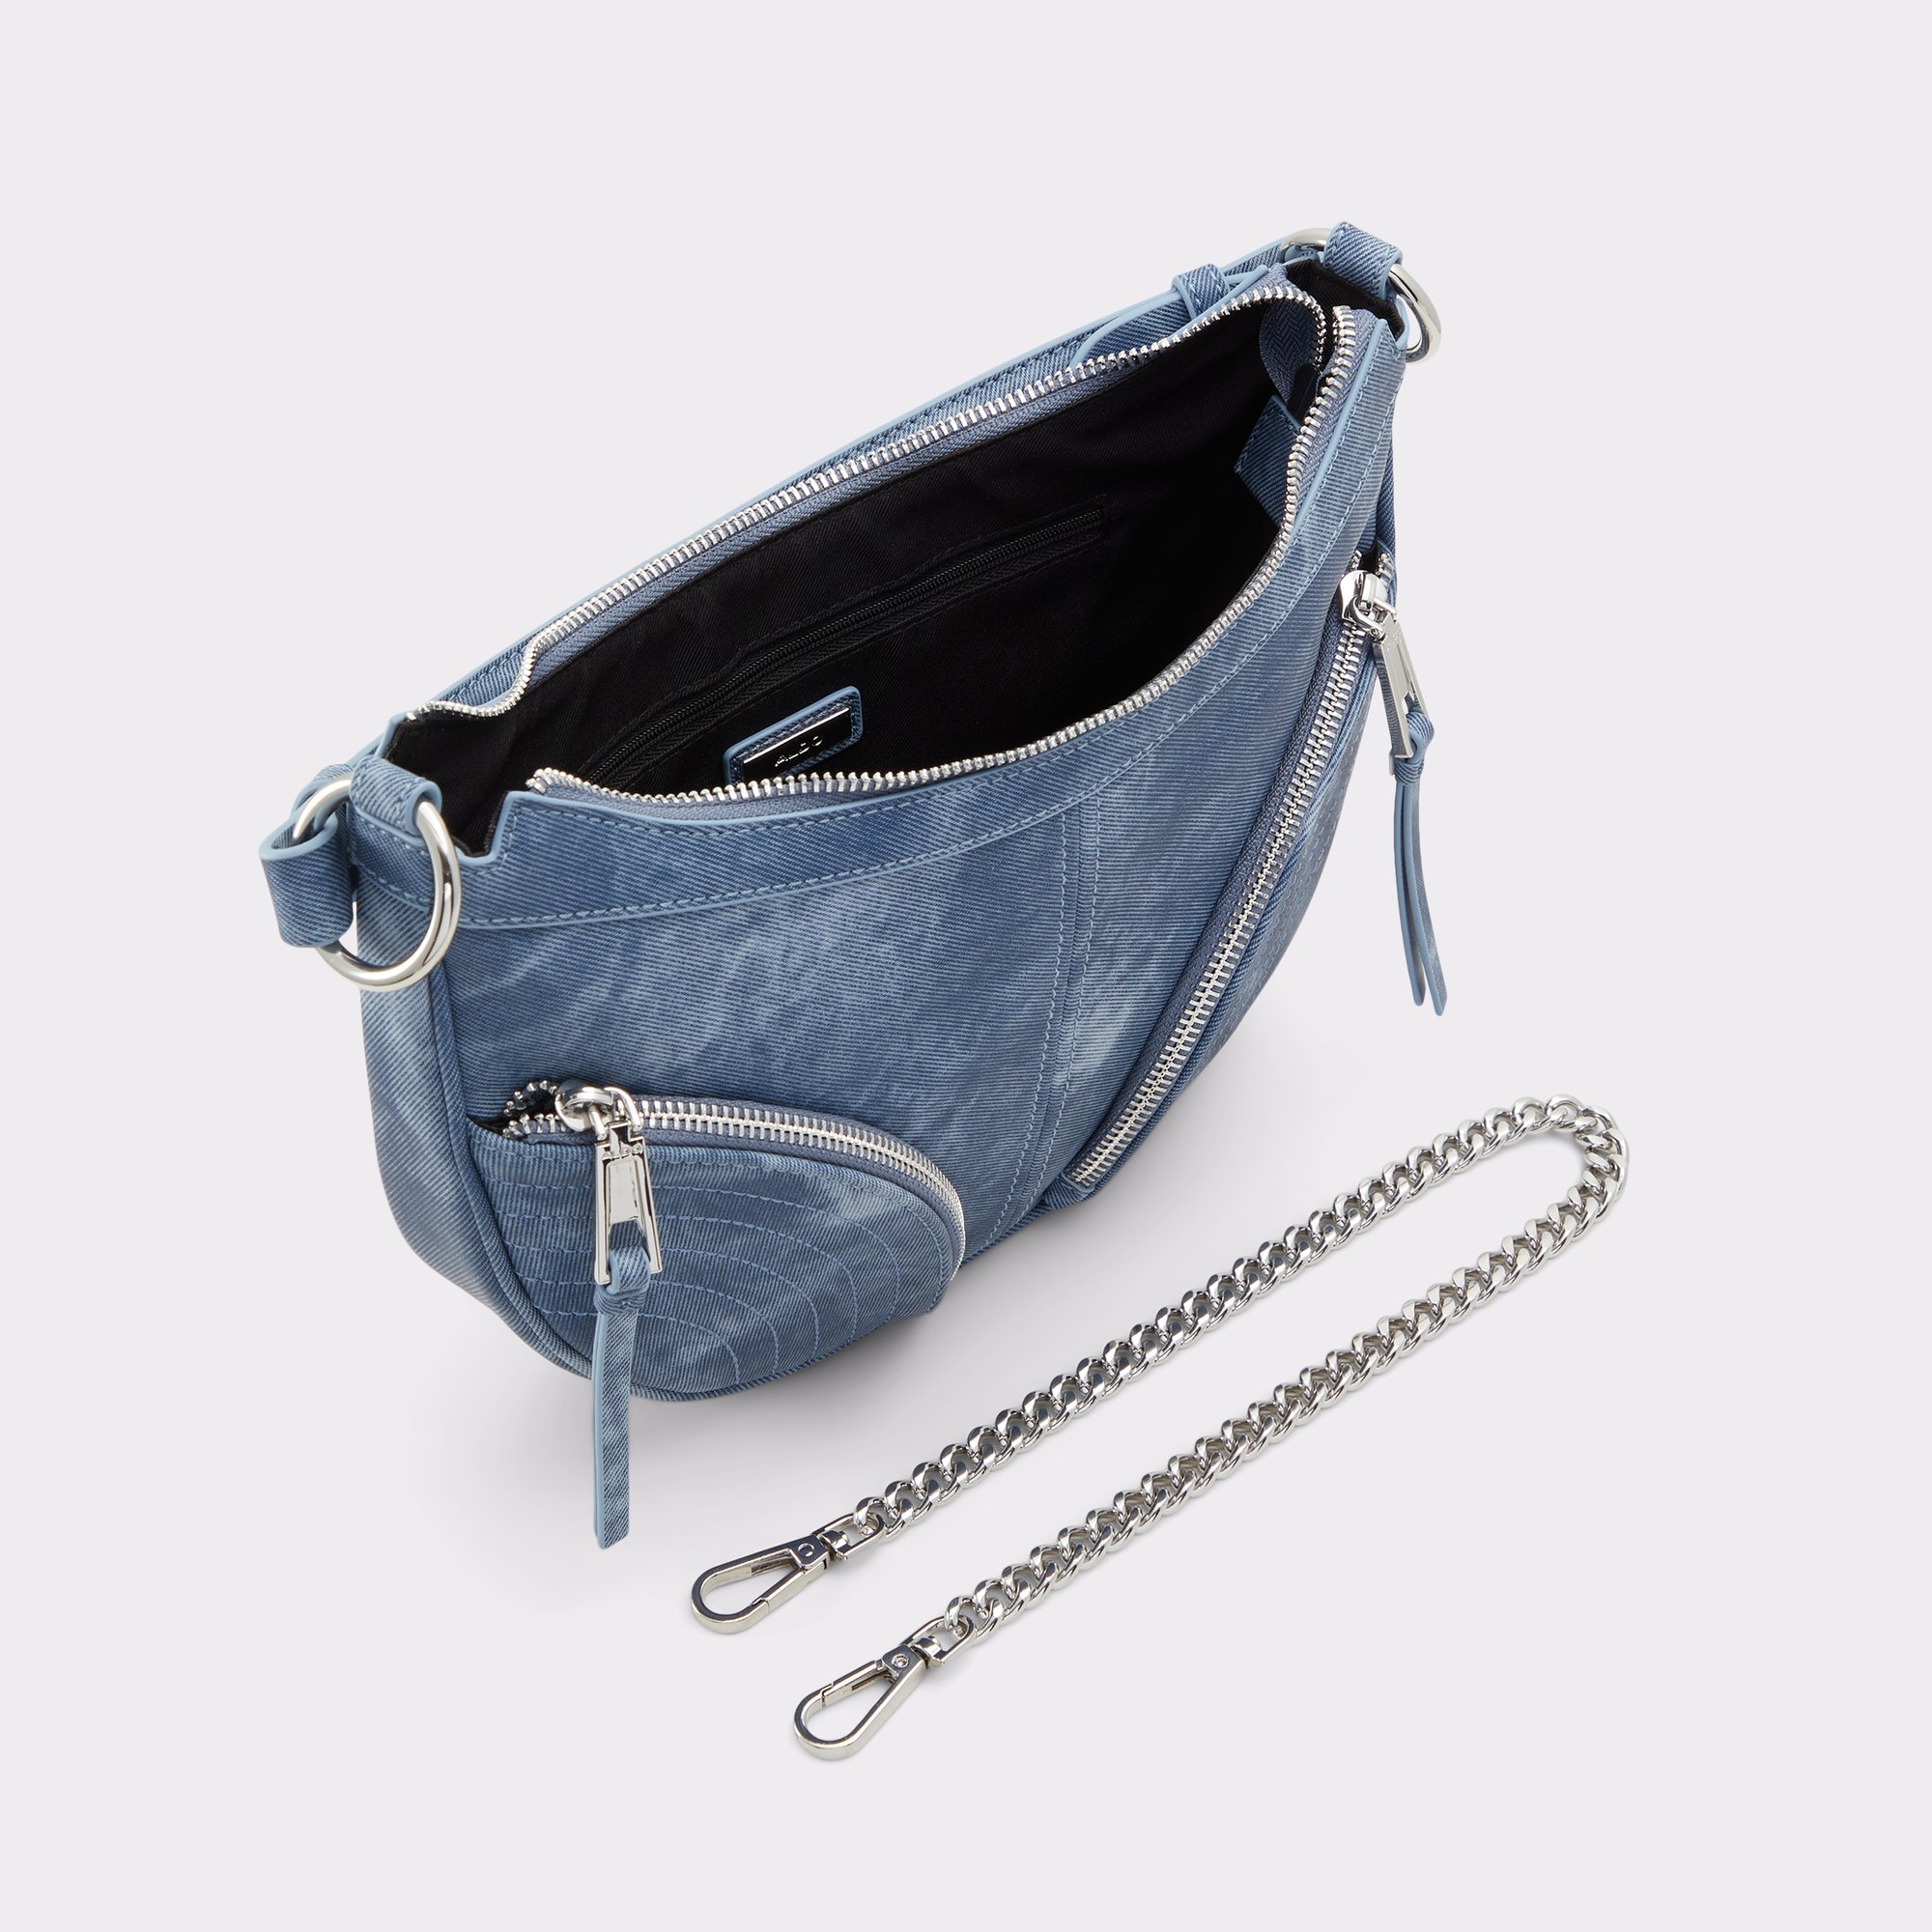 Beranyx Blue Women's Shoulder Bags | ALDO Canada